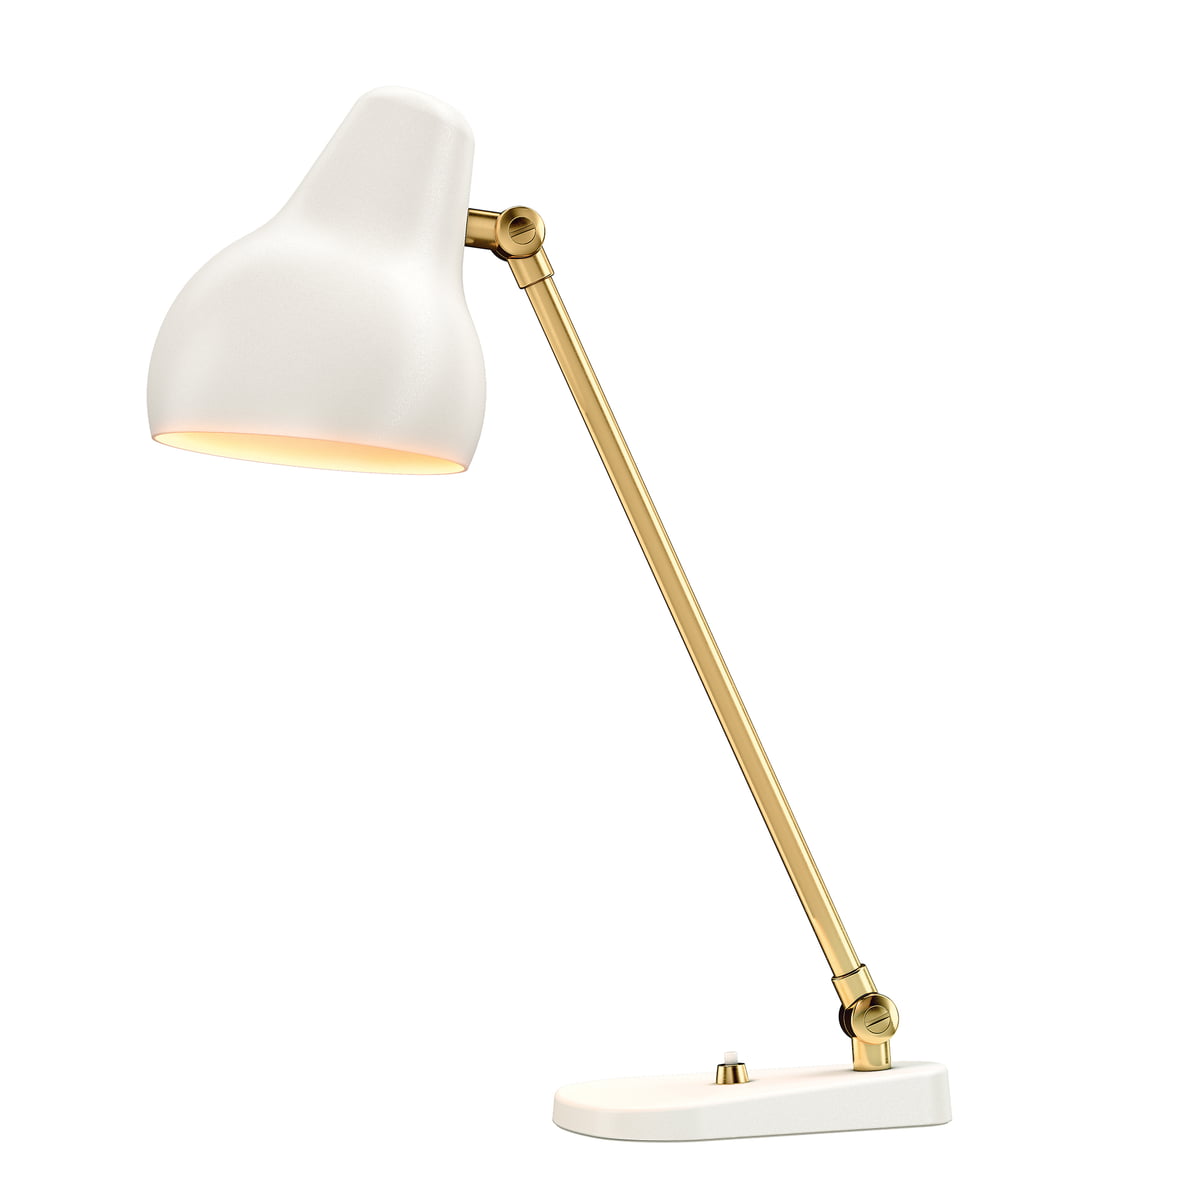 Louis poulsen - Vl38 led table lamp, white / brass